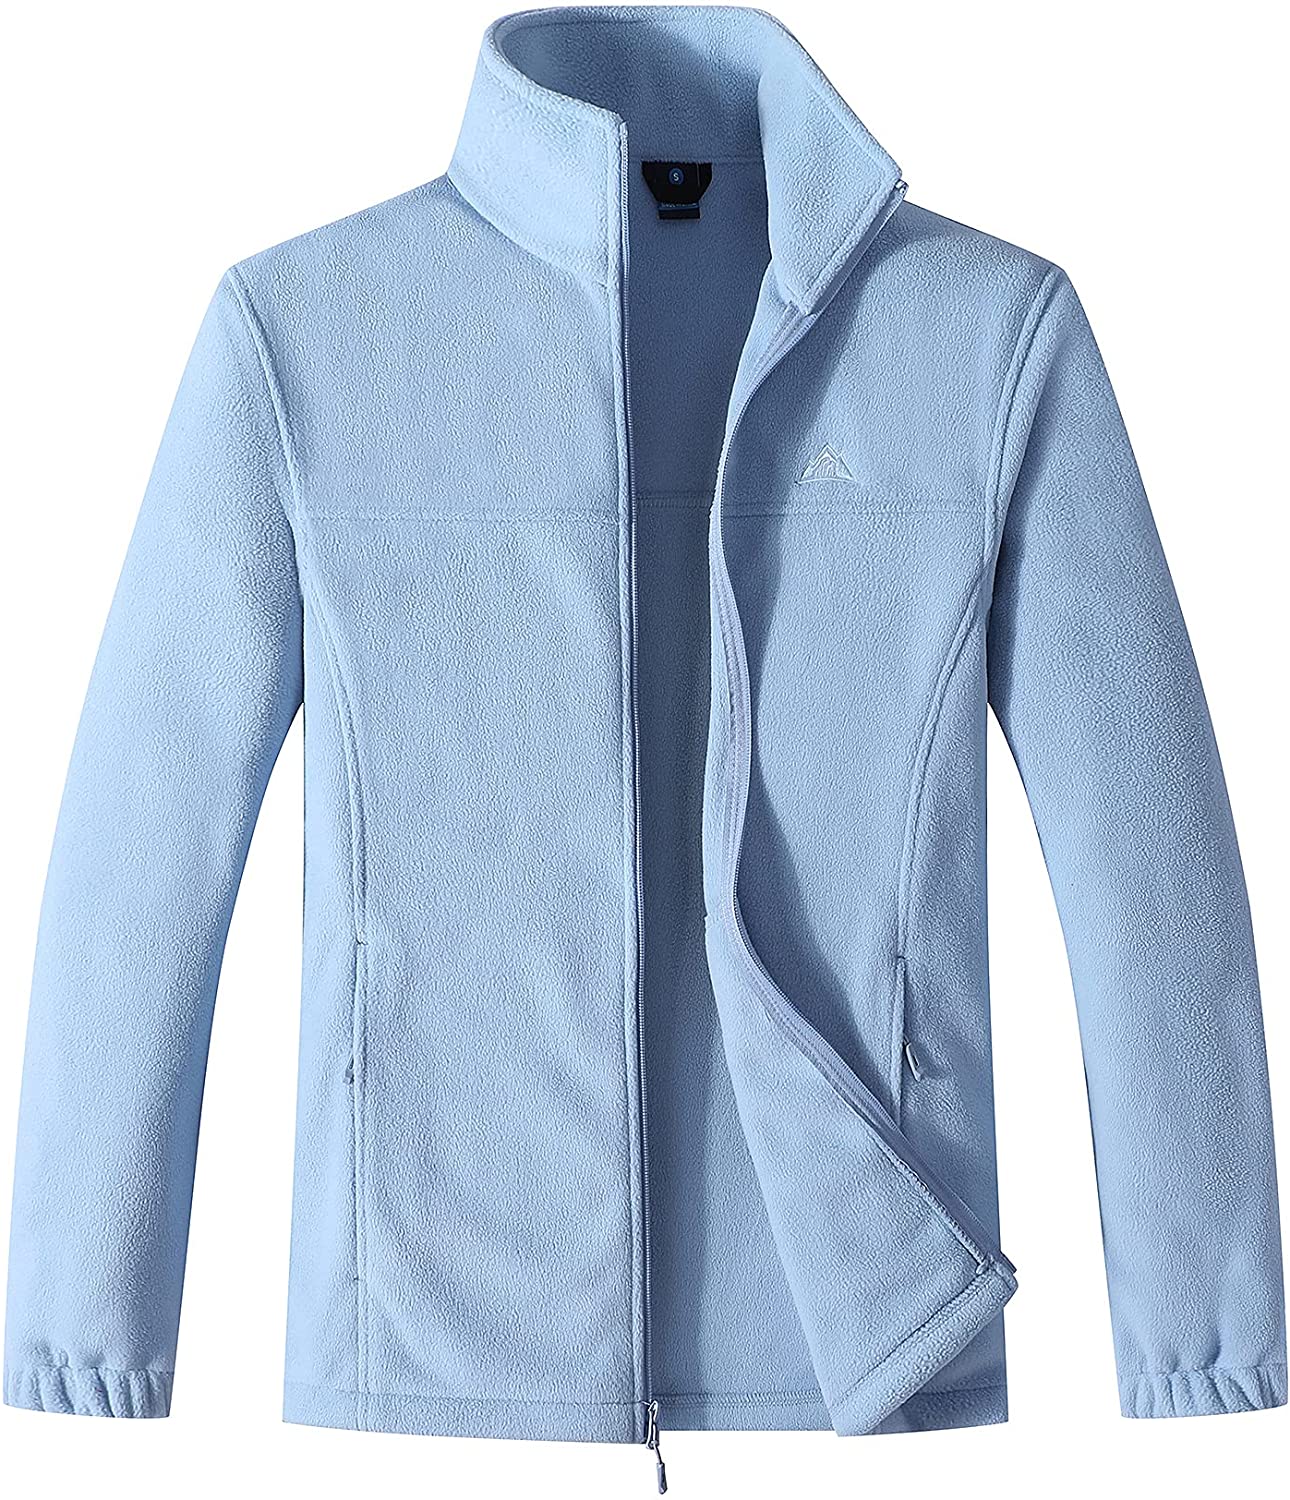 Men's Lightweight Full Zip Fleece Jackets Soft Polar Fleece outdoor